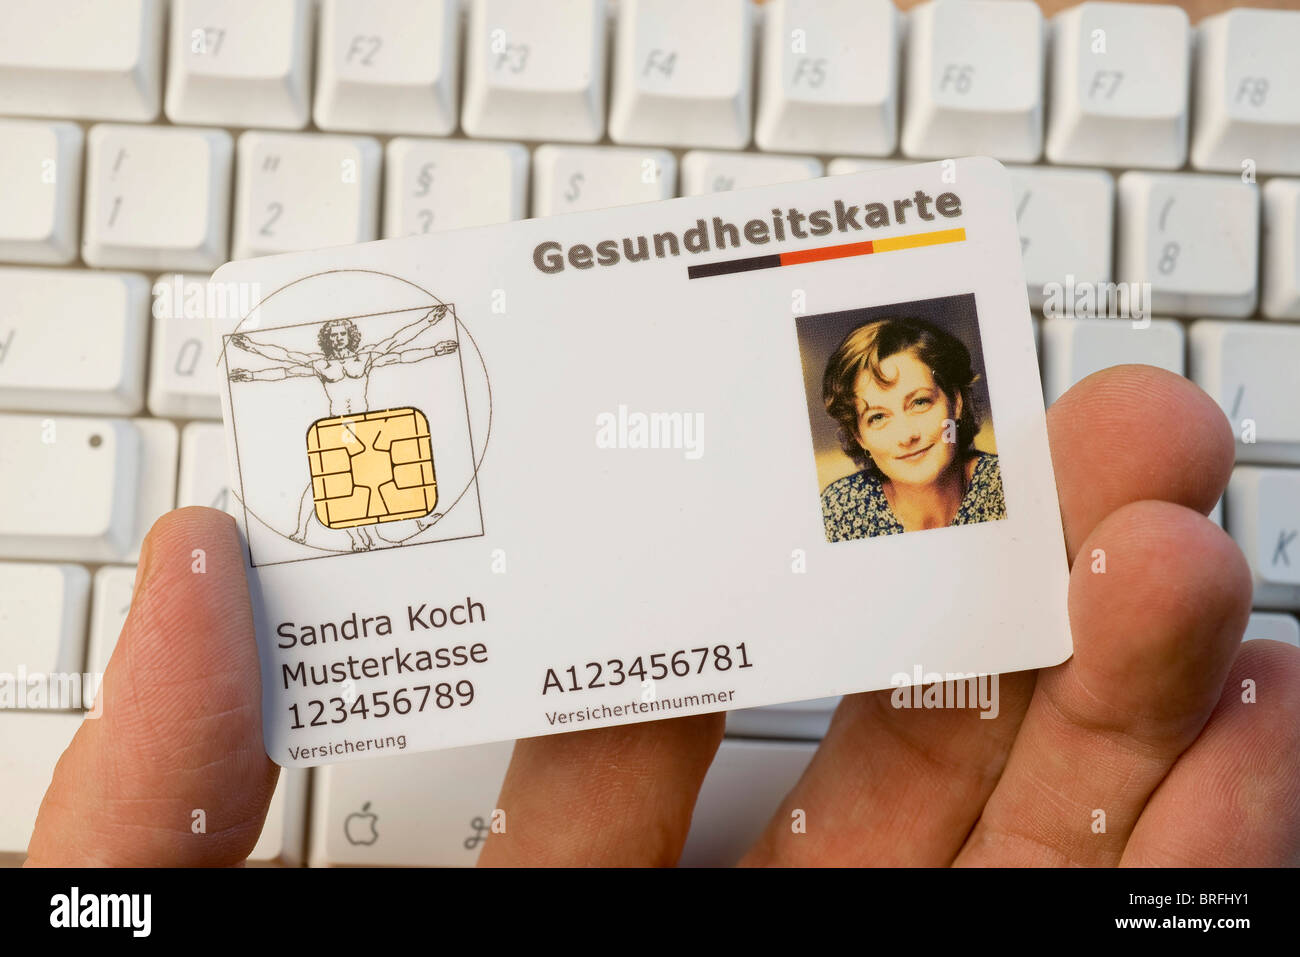 German electronic health insurance card on a keyboard Stock Photo